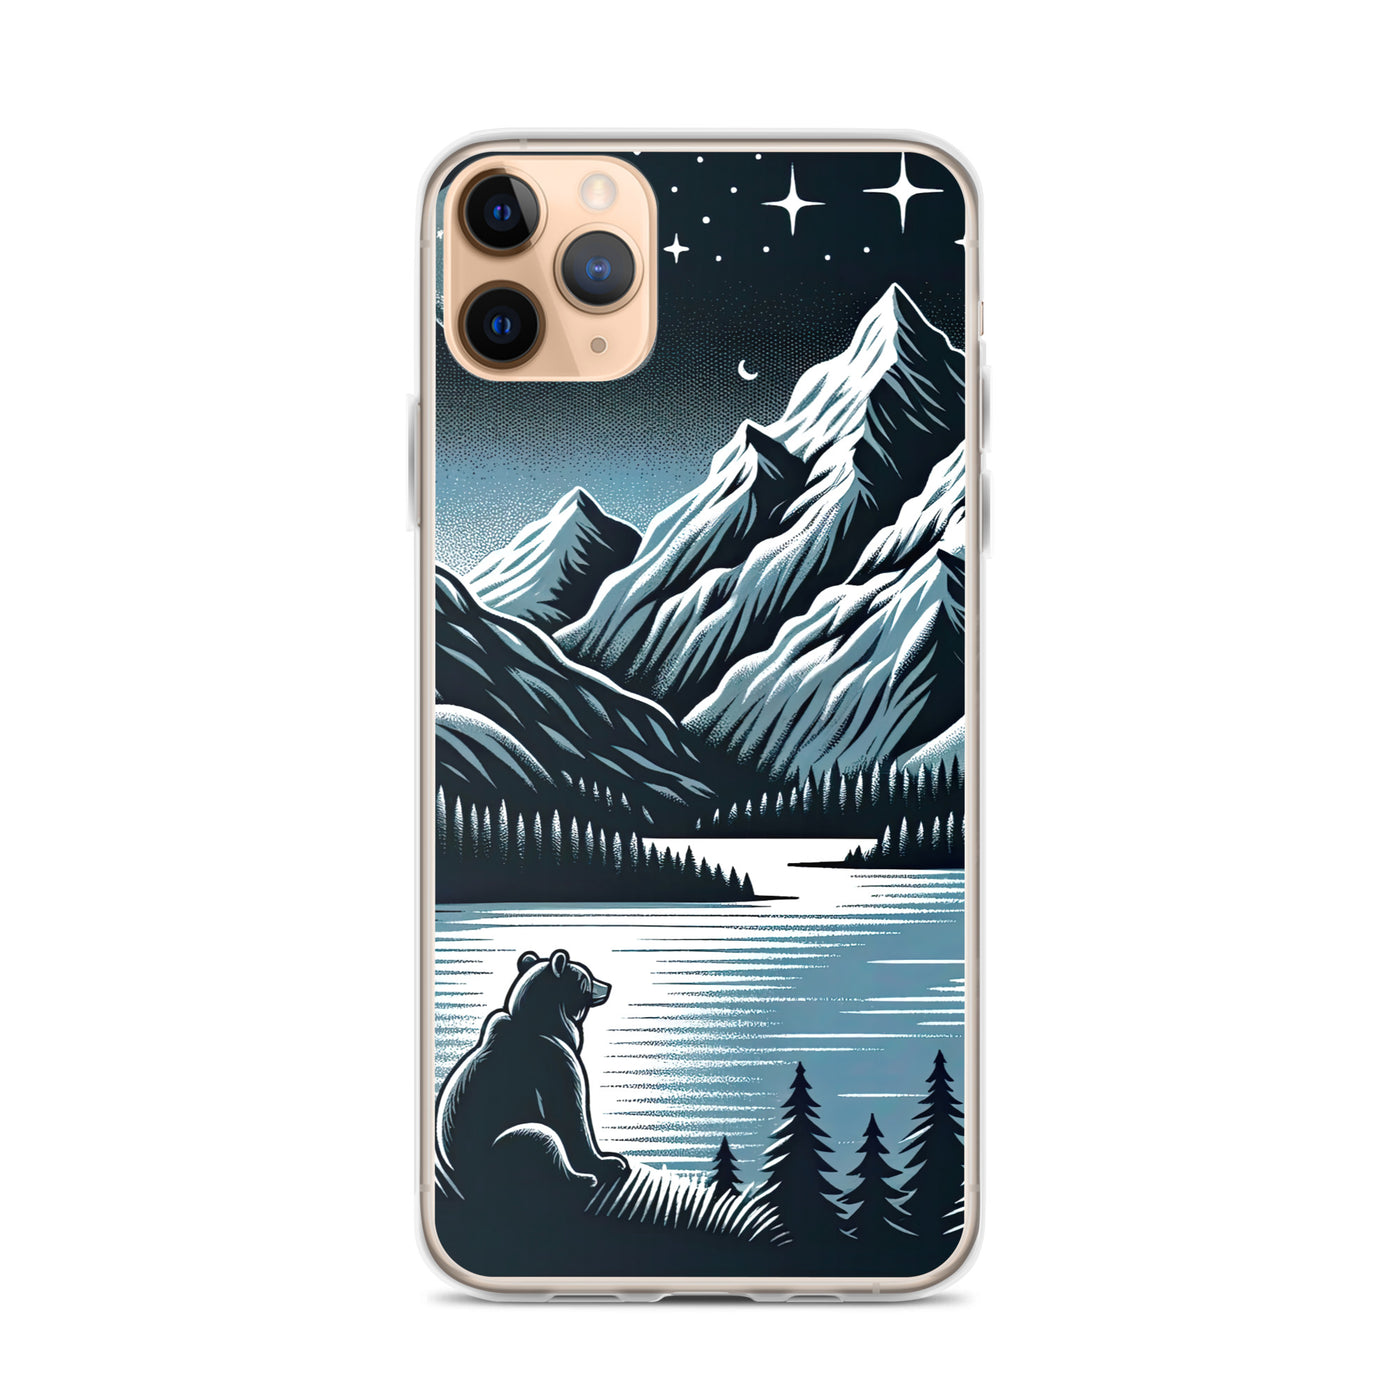 Bär in Alpen-Mondnacht, silberne Berge, schimmernde Seen - iPhone Schutzhülle (durchsichtig) camping xxx yyy zzz iPhone 11 Pro Max